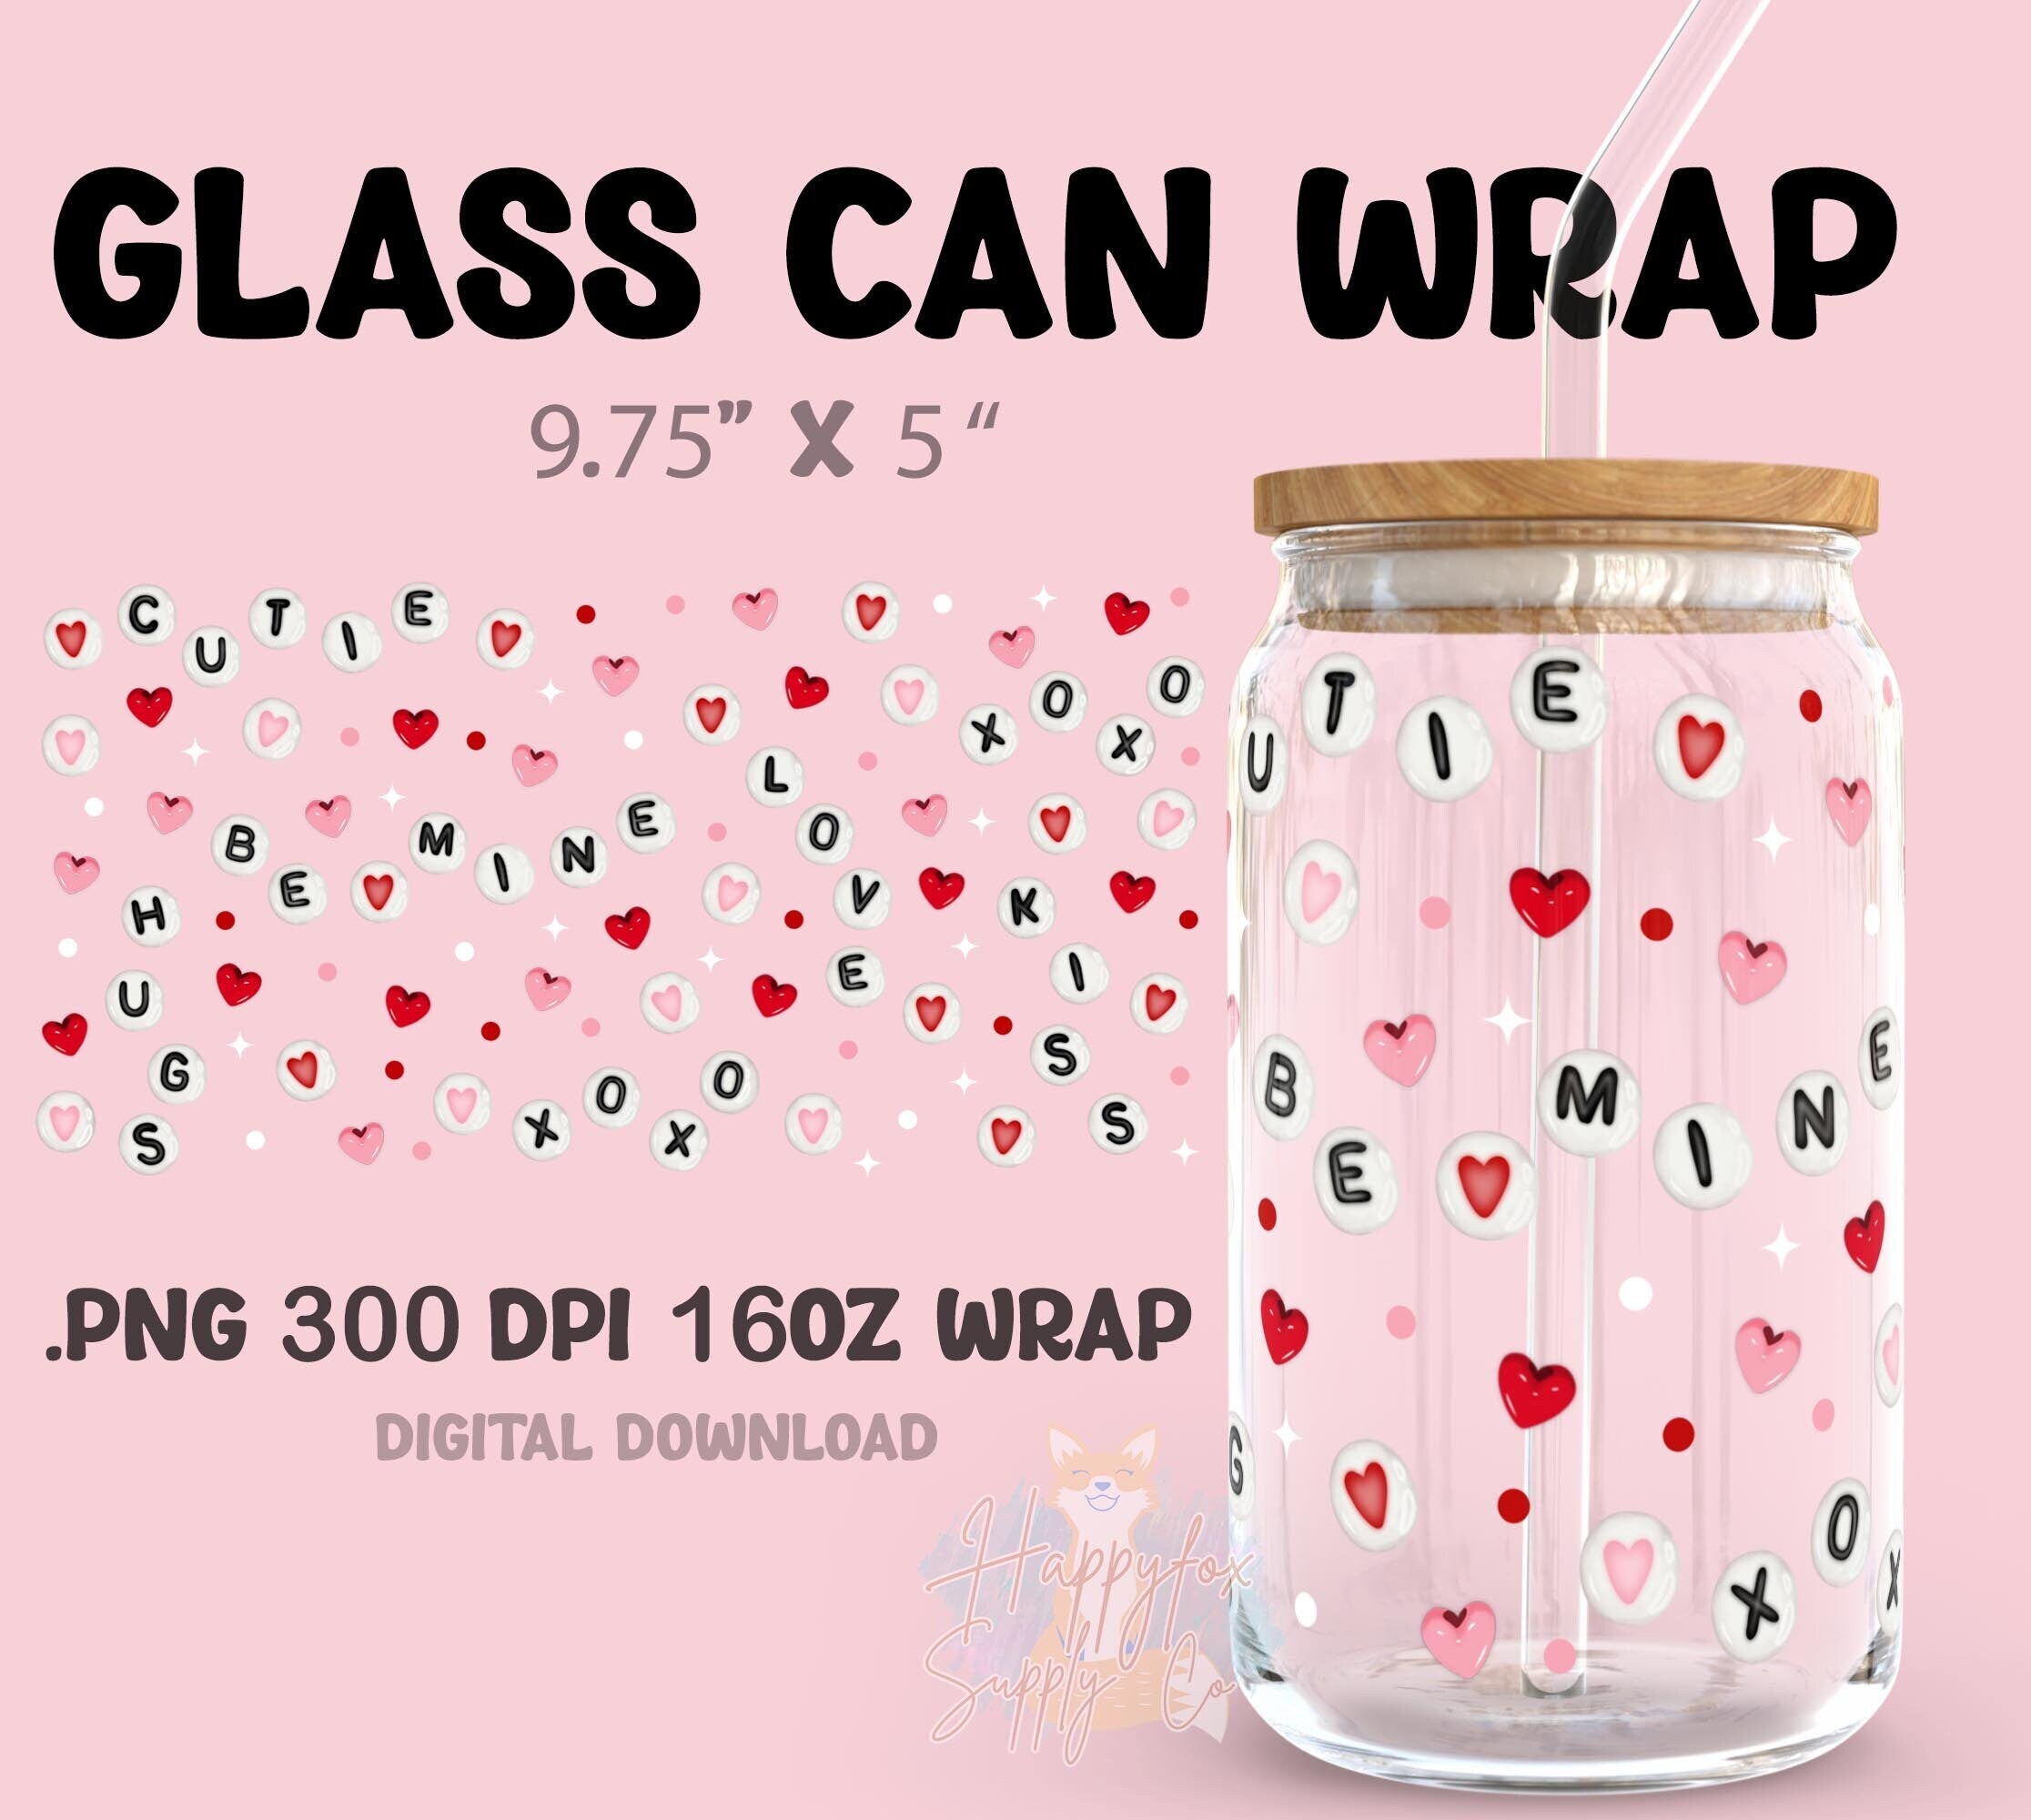 Digital Download 16oz Glass Can Wrap 300 DPI .PNG Valentine Beads UVDTF Sublimation Printed Vinyl Transparent 16oz Wrap Friendship Beads